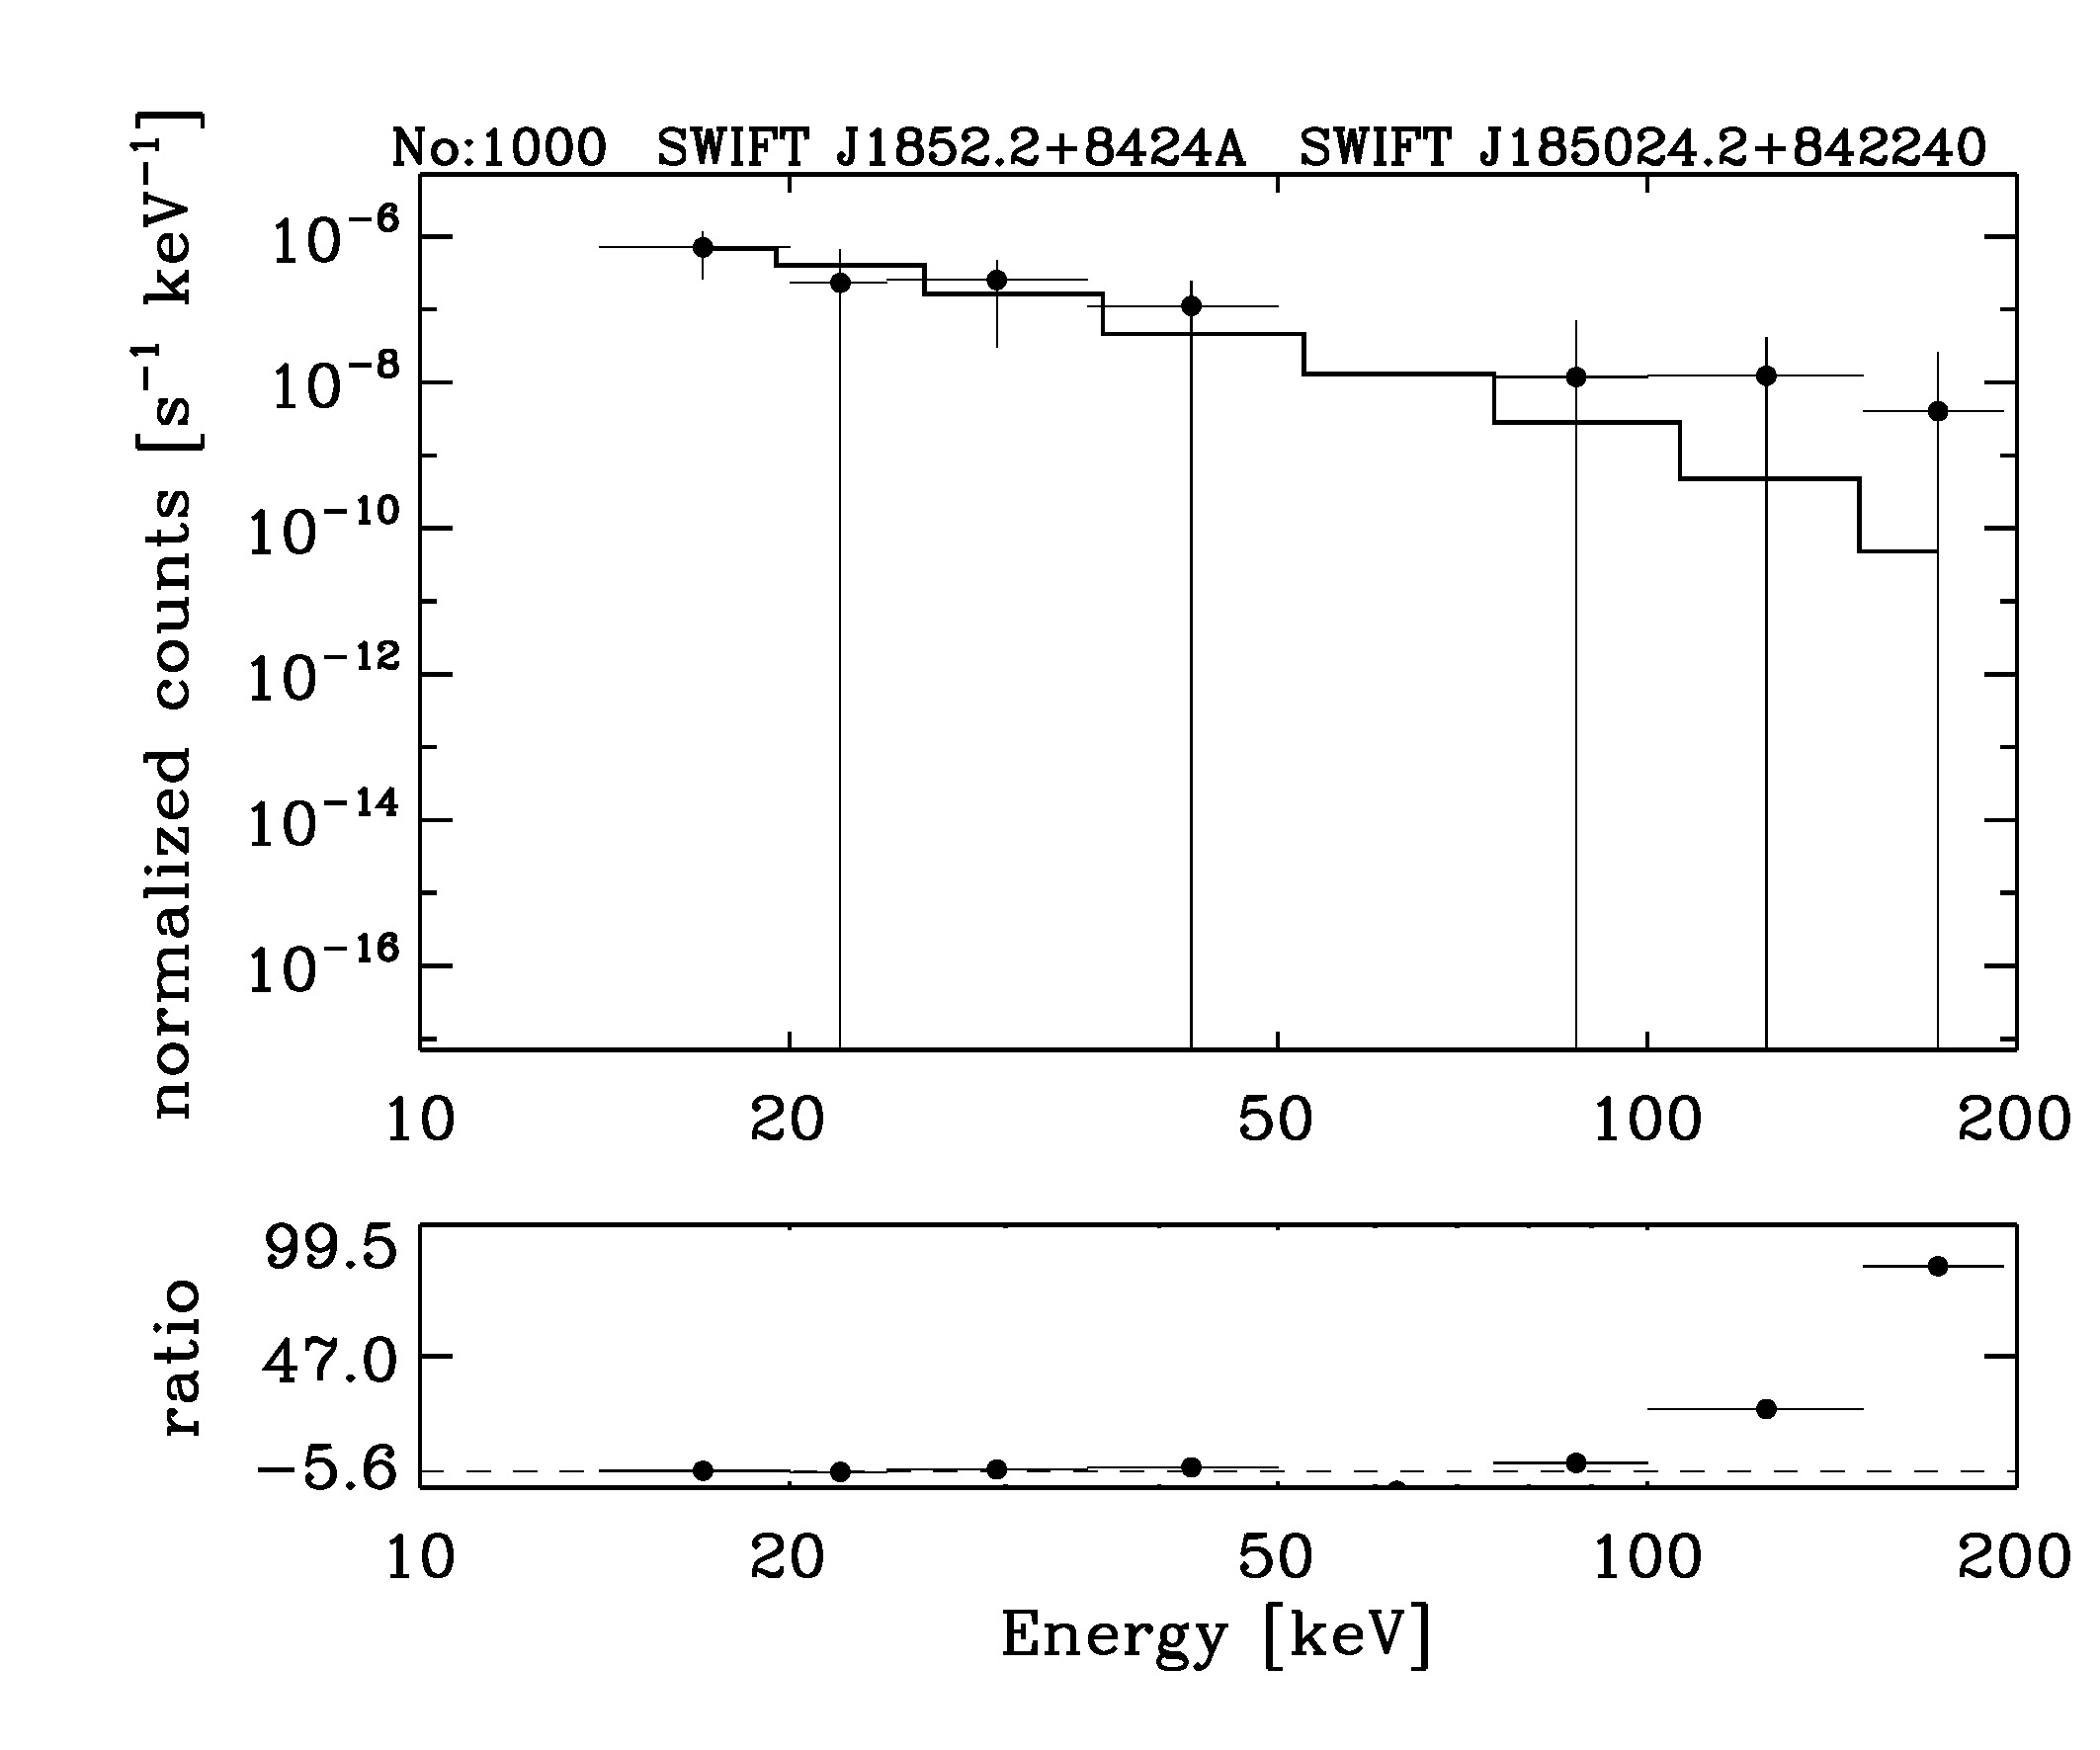 BAT Spectrum for SWIFT J1852.2+8424A